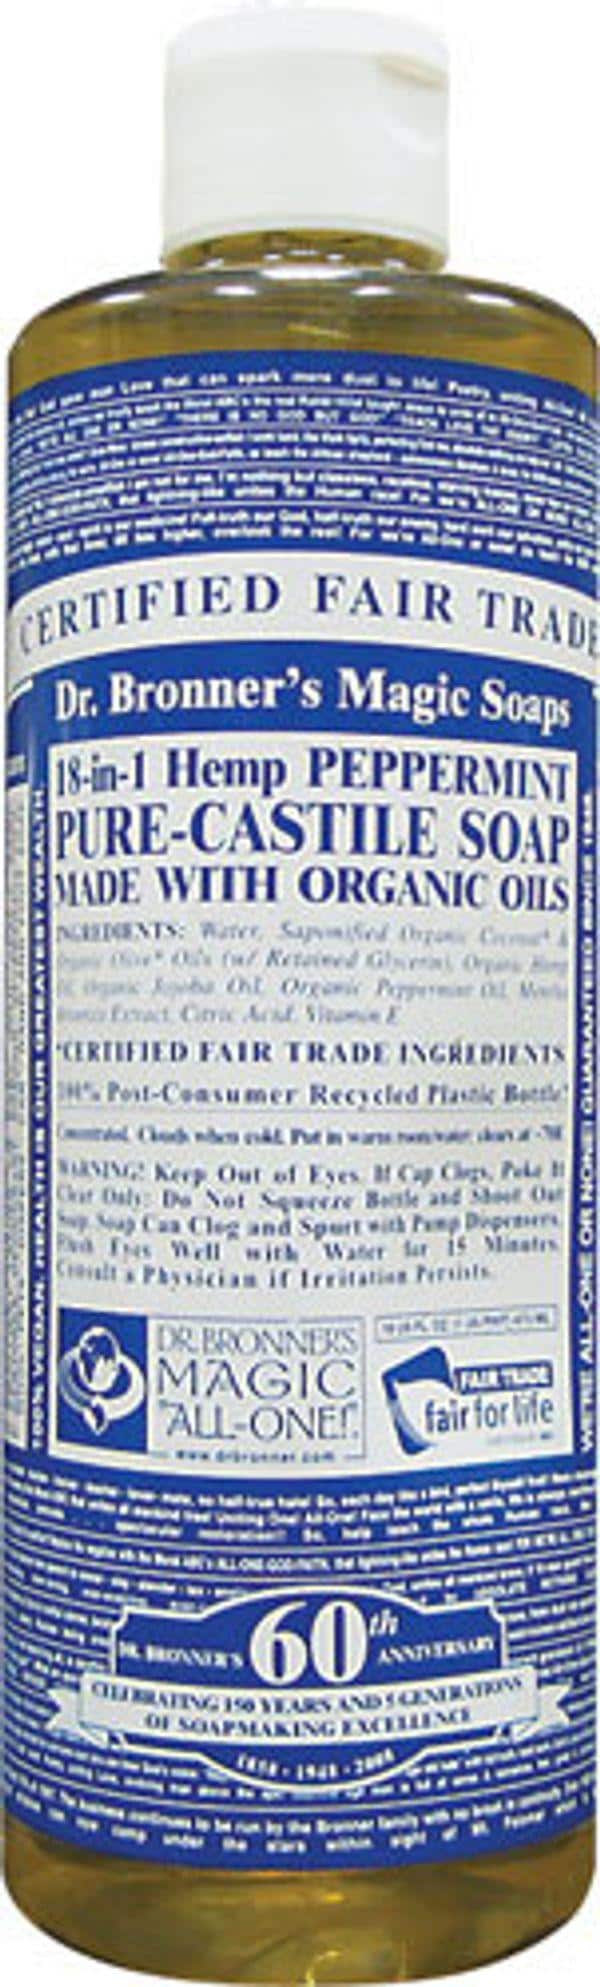 test-Dr. Emanuel Bronner and His Liquid Castile Soap